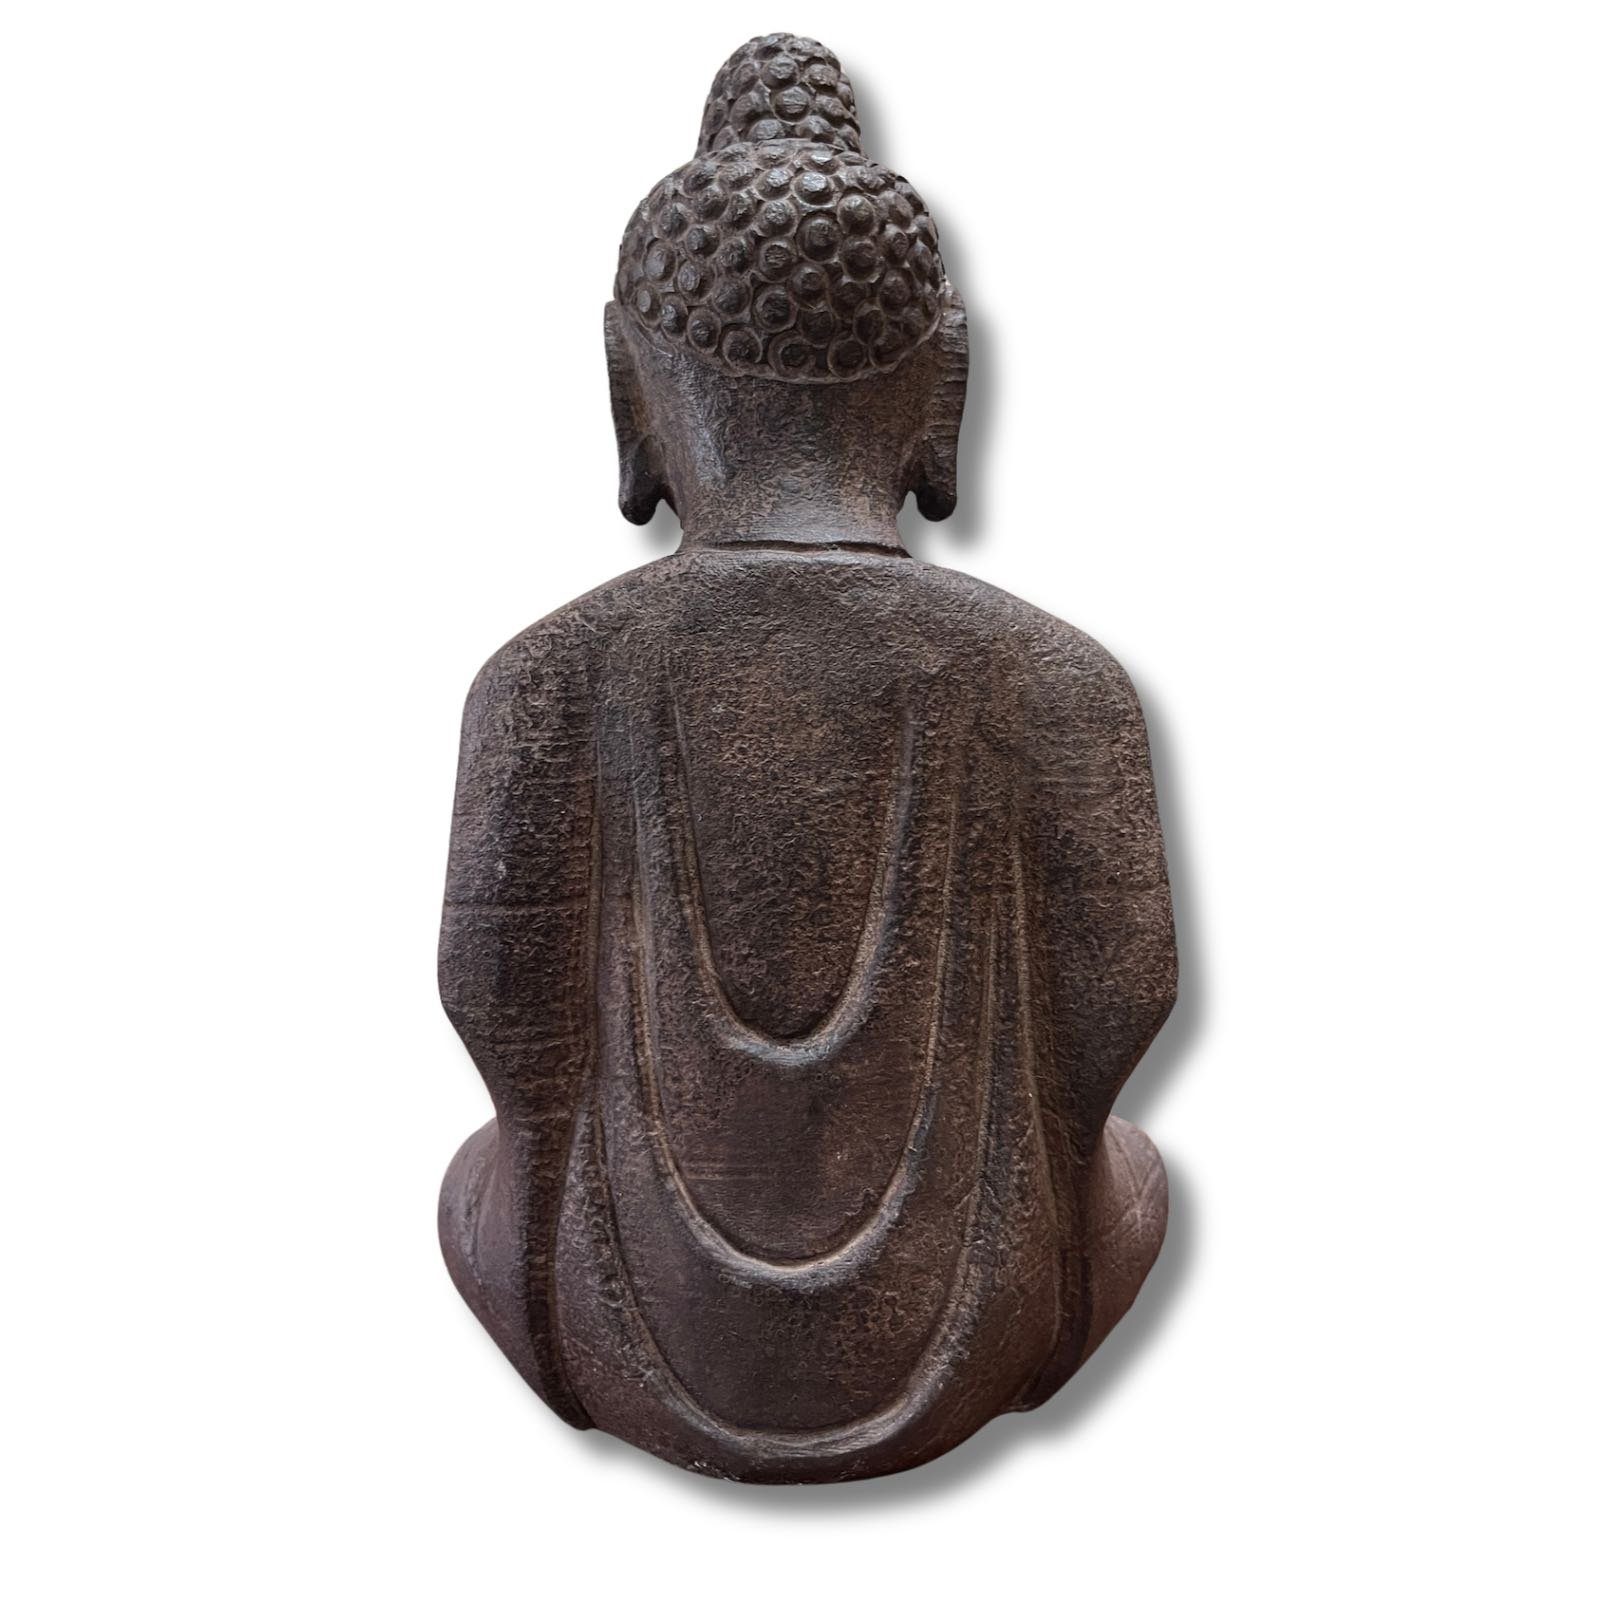 Asien LifeStyle Buddhafigur Naturstein Buddha Garten Figur groß 36cm Meditation Tibet China